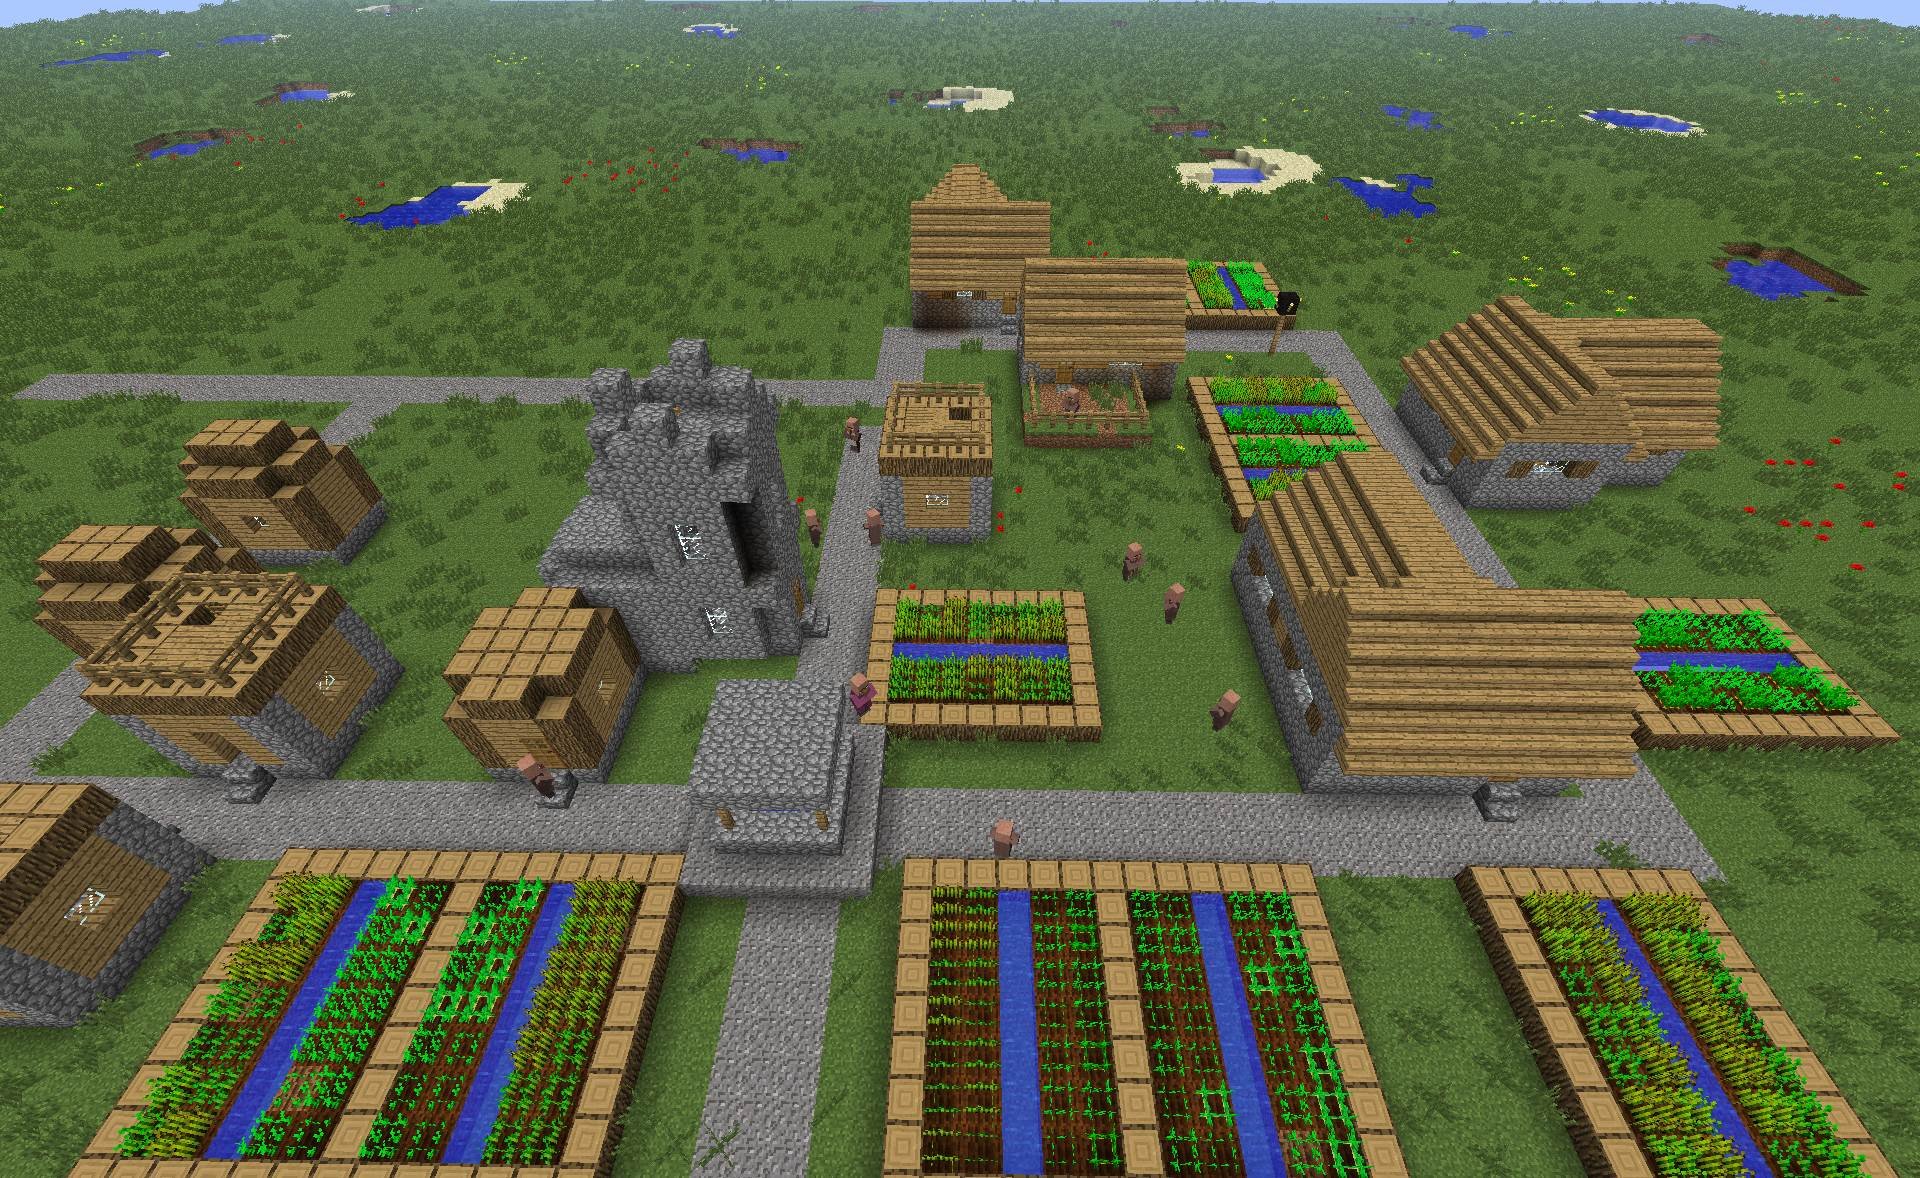 Майнкрафт про деревню. Minecraft деревня жителей. Старая деревня майнкрафт. Майнкрафтдеревня щителей. Деревня в майин крафте.